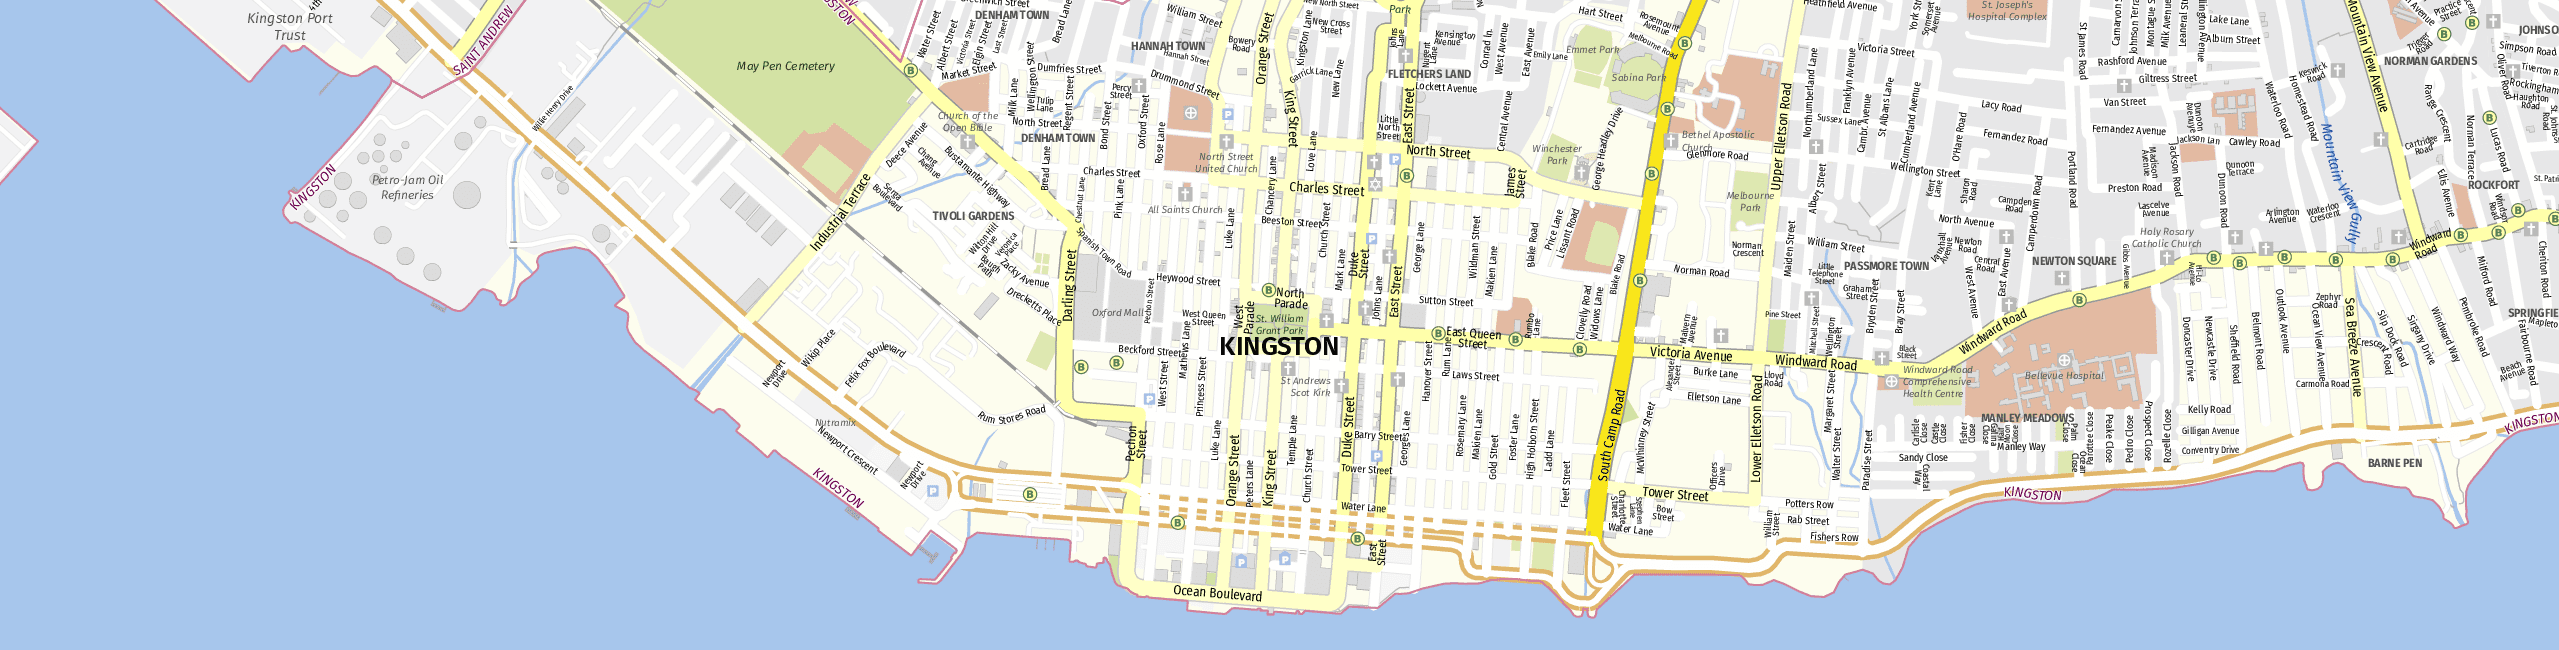 Stadtplan Kingston zum Downloaden.